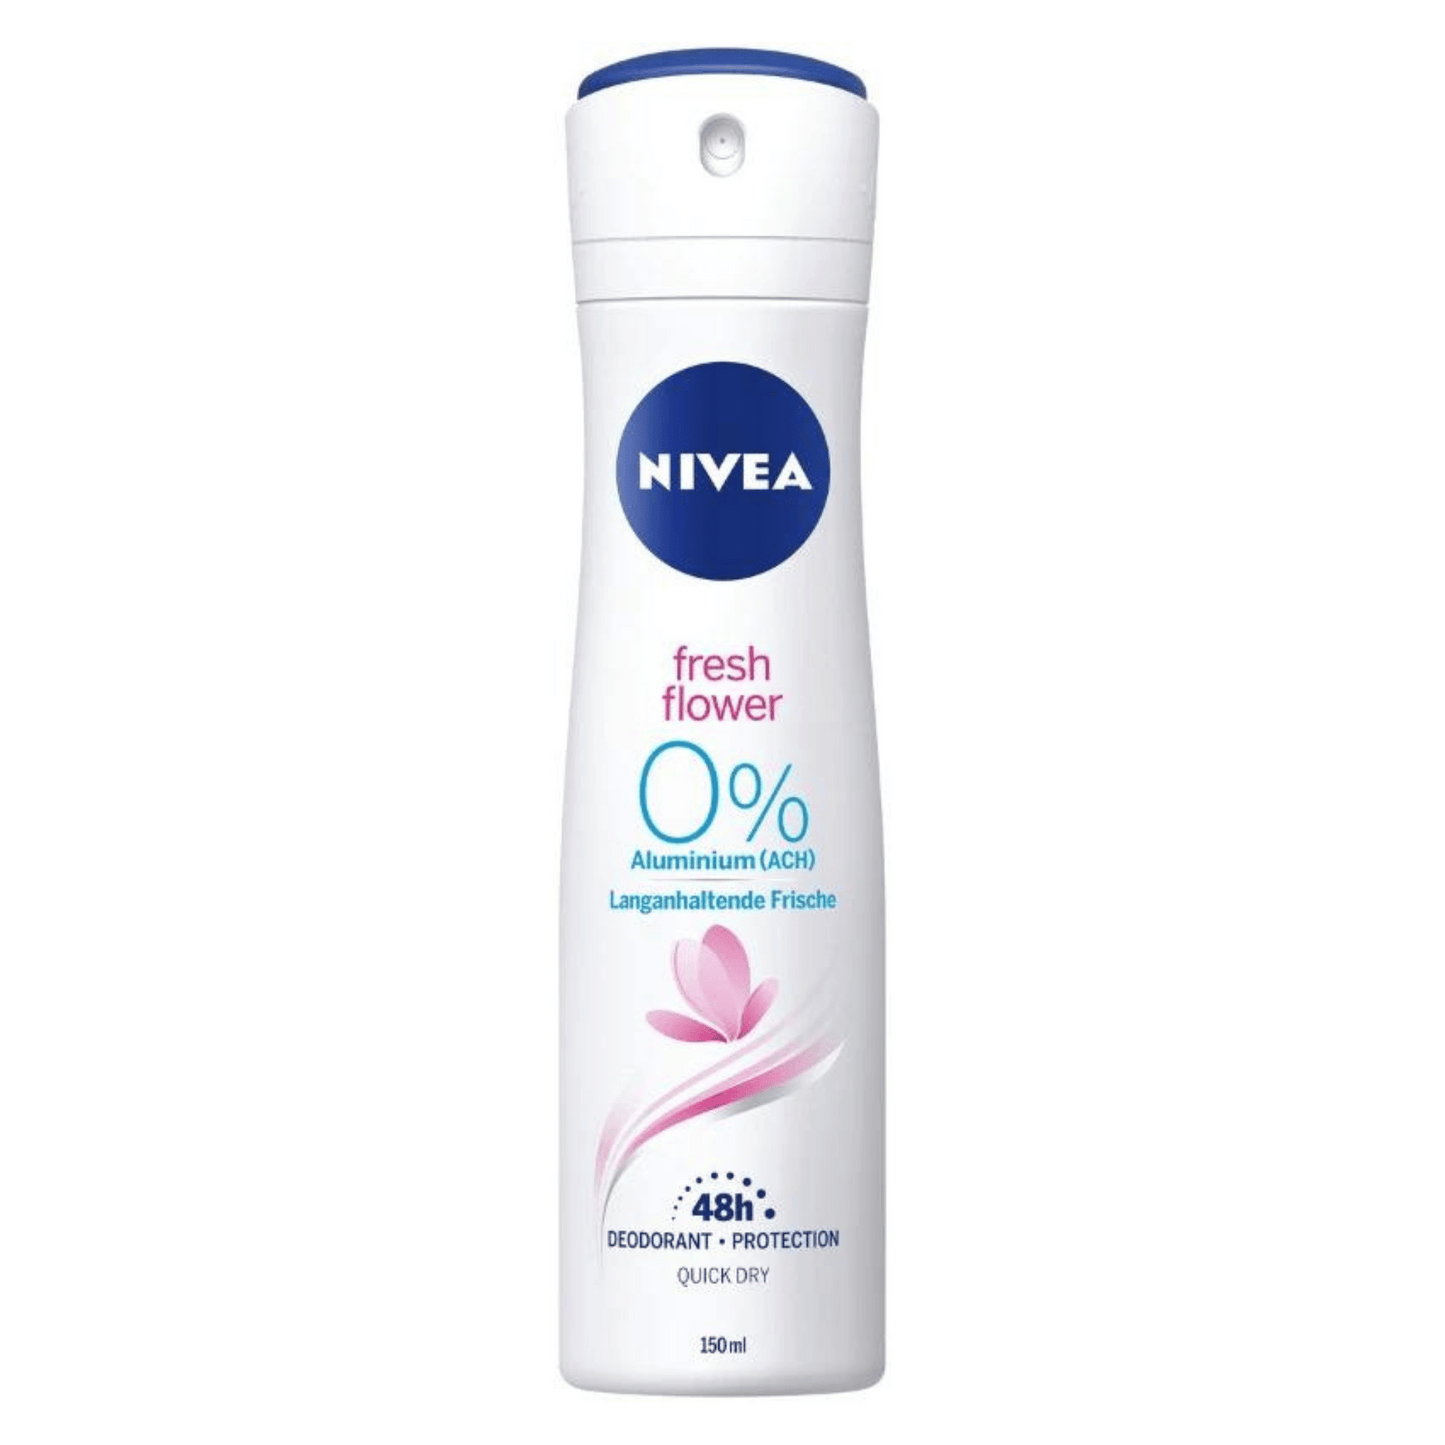 Primary Image of Women's Spray Fresh Flower Deodorant